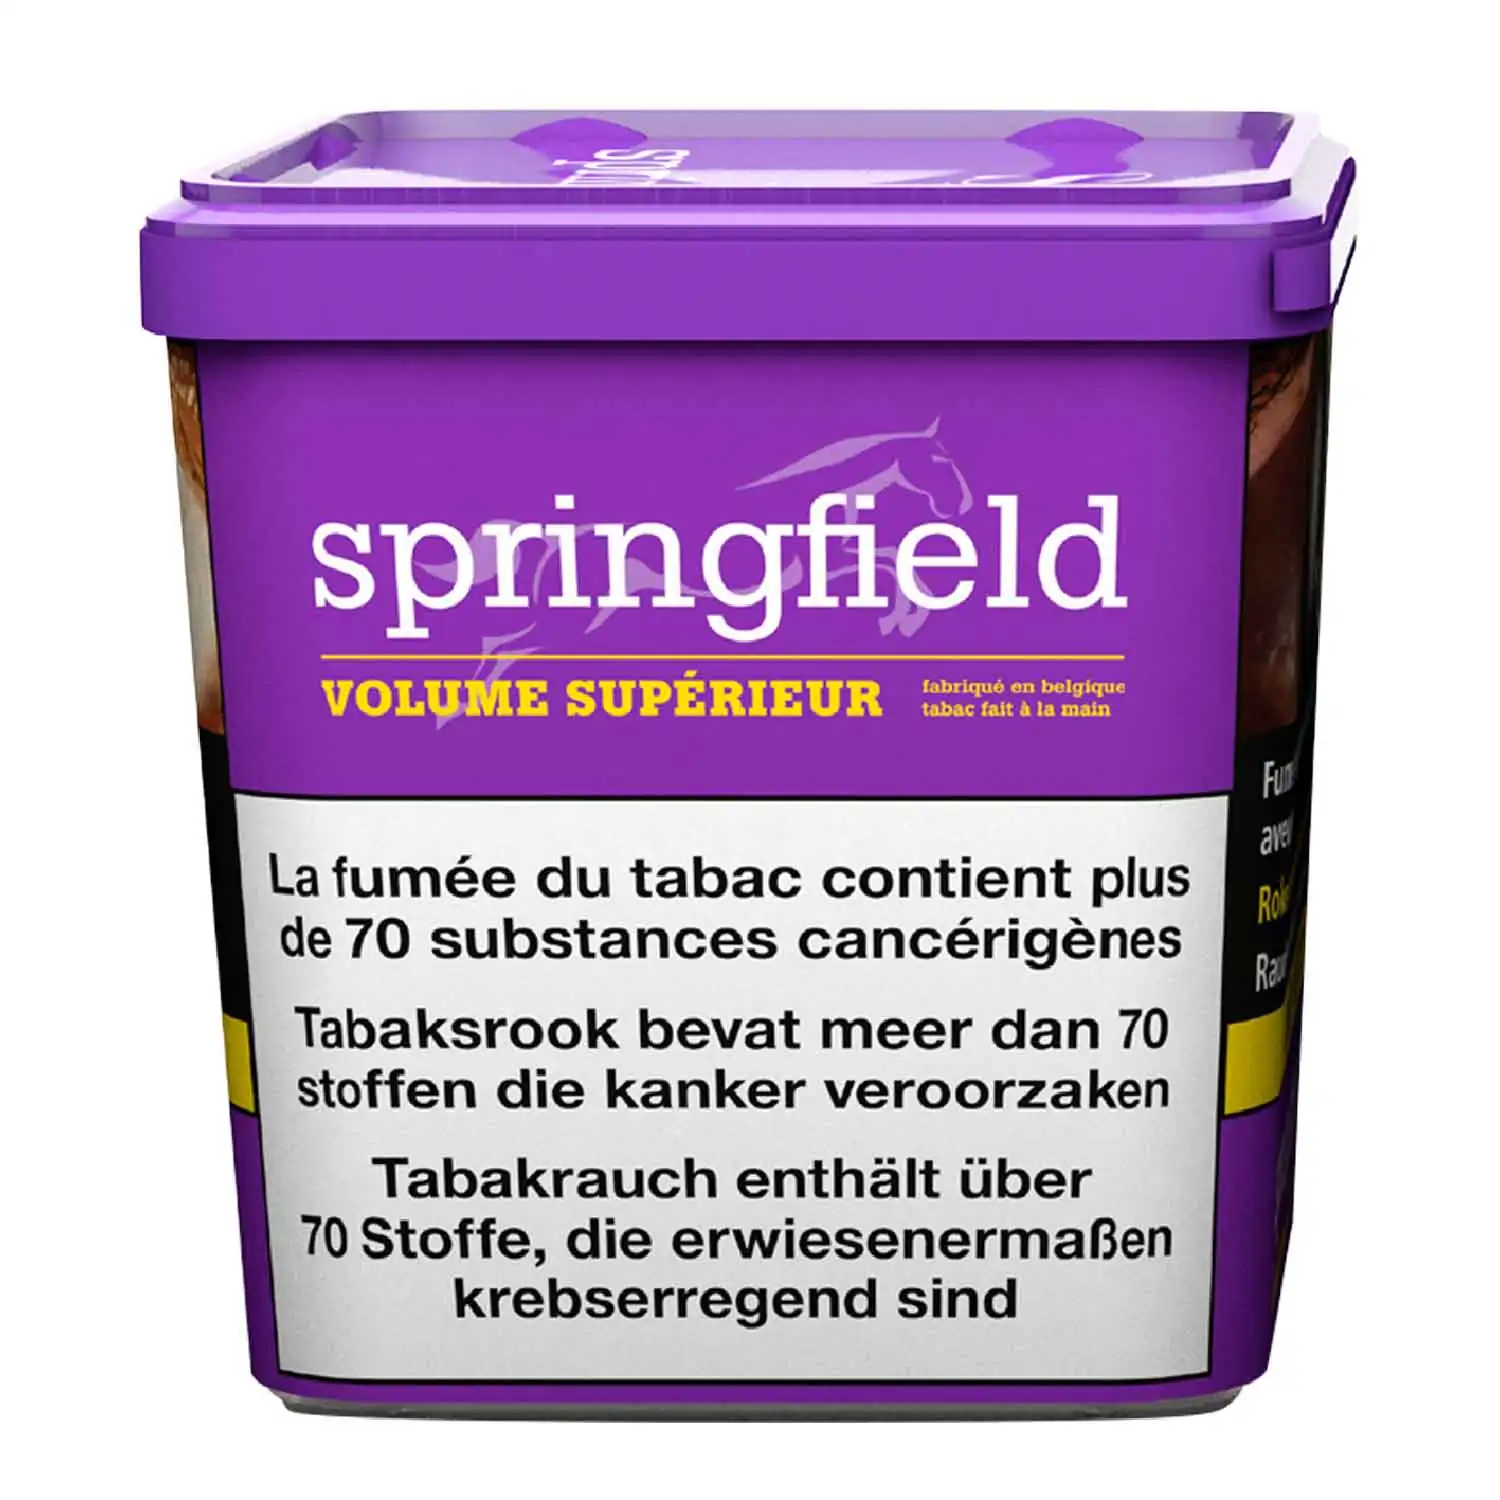 Springfield superior volume 250g - Buy at Real Tobacco